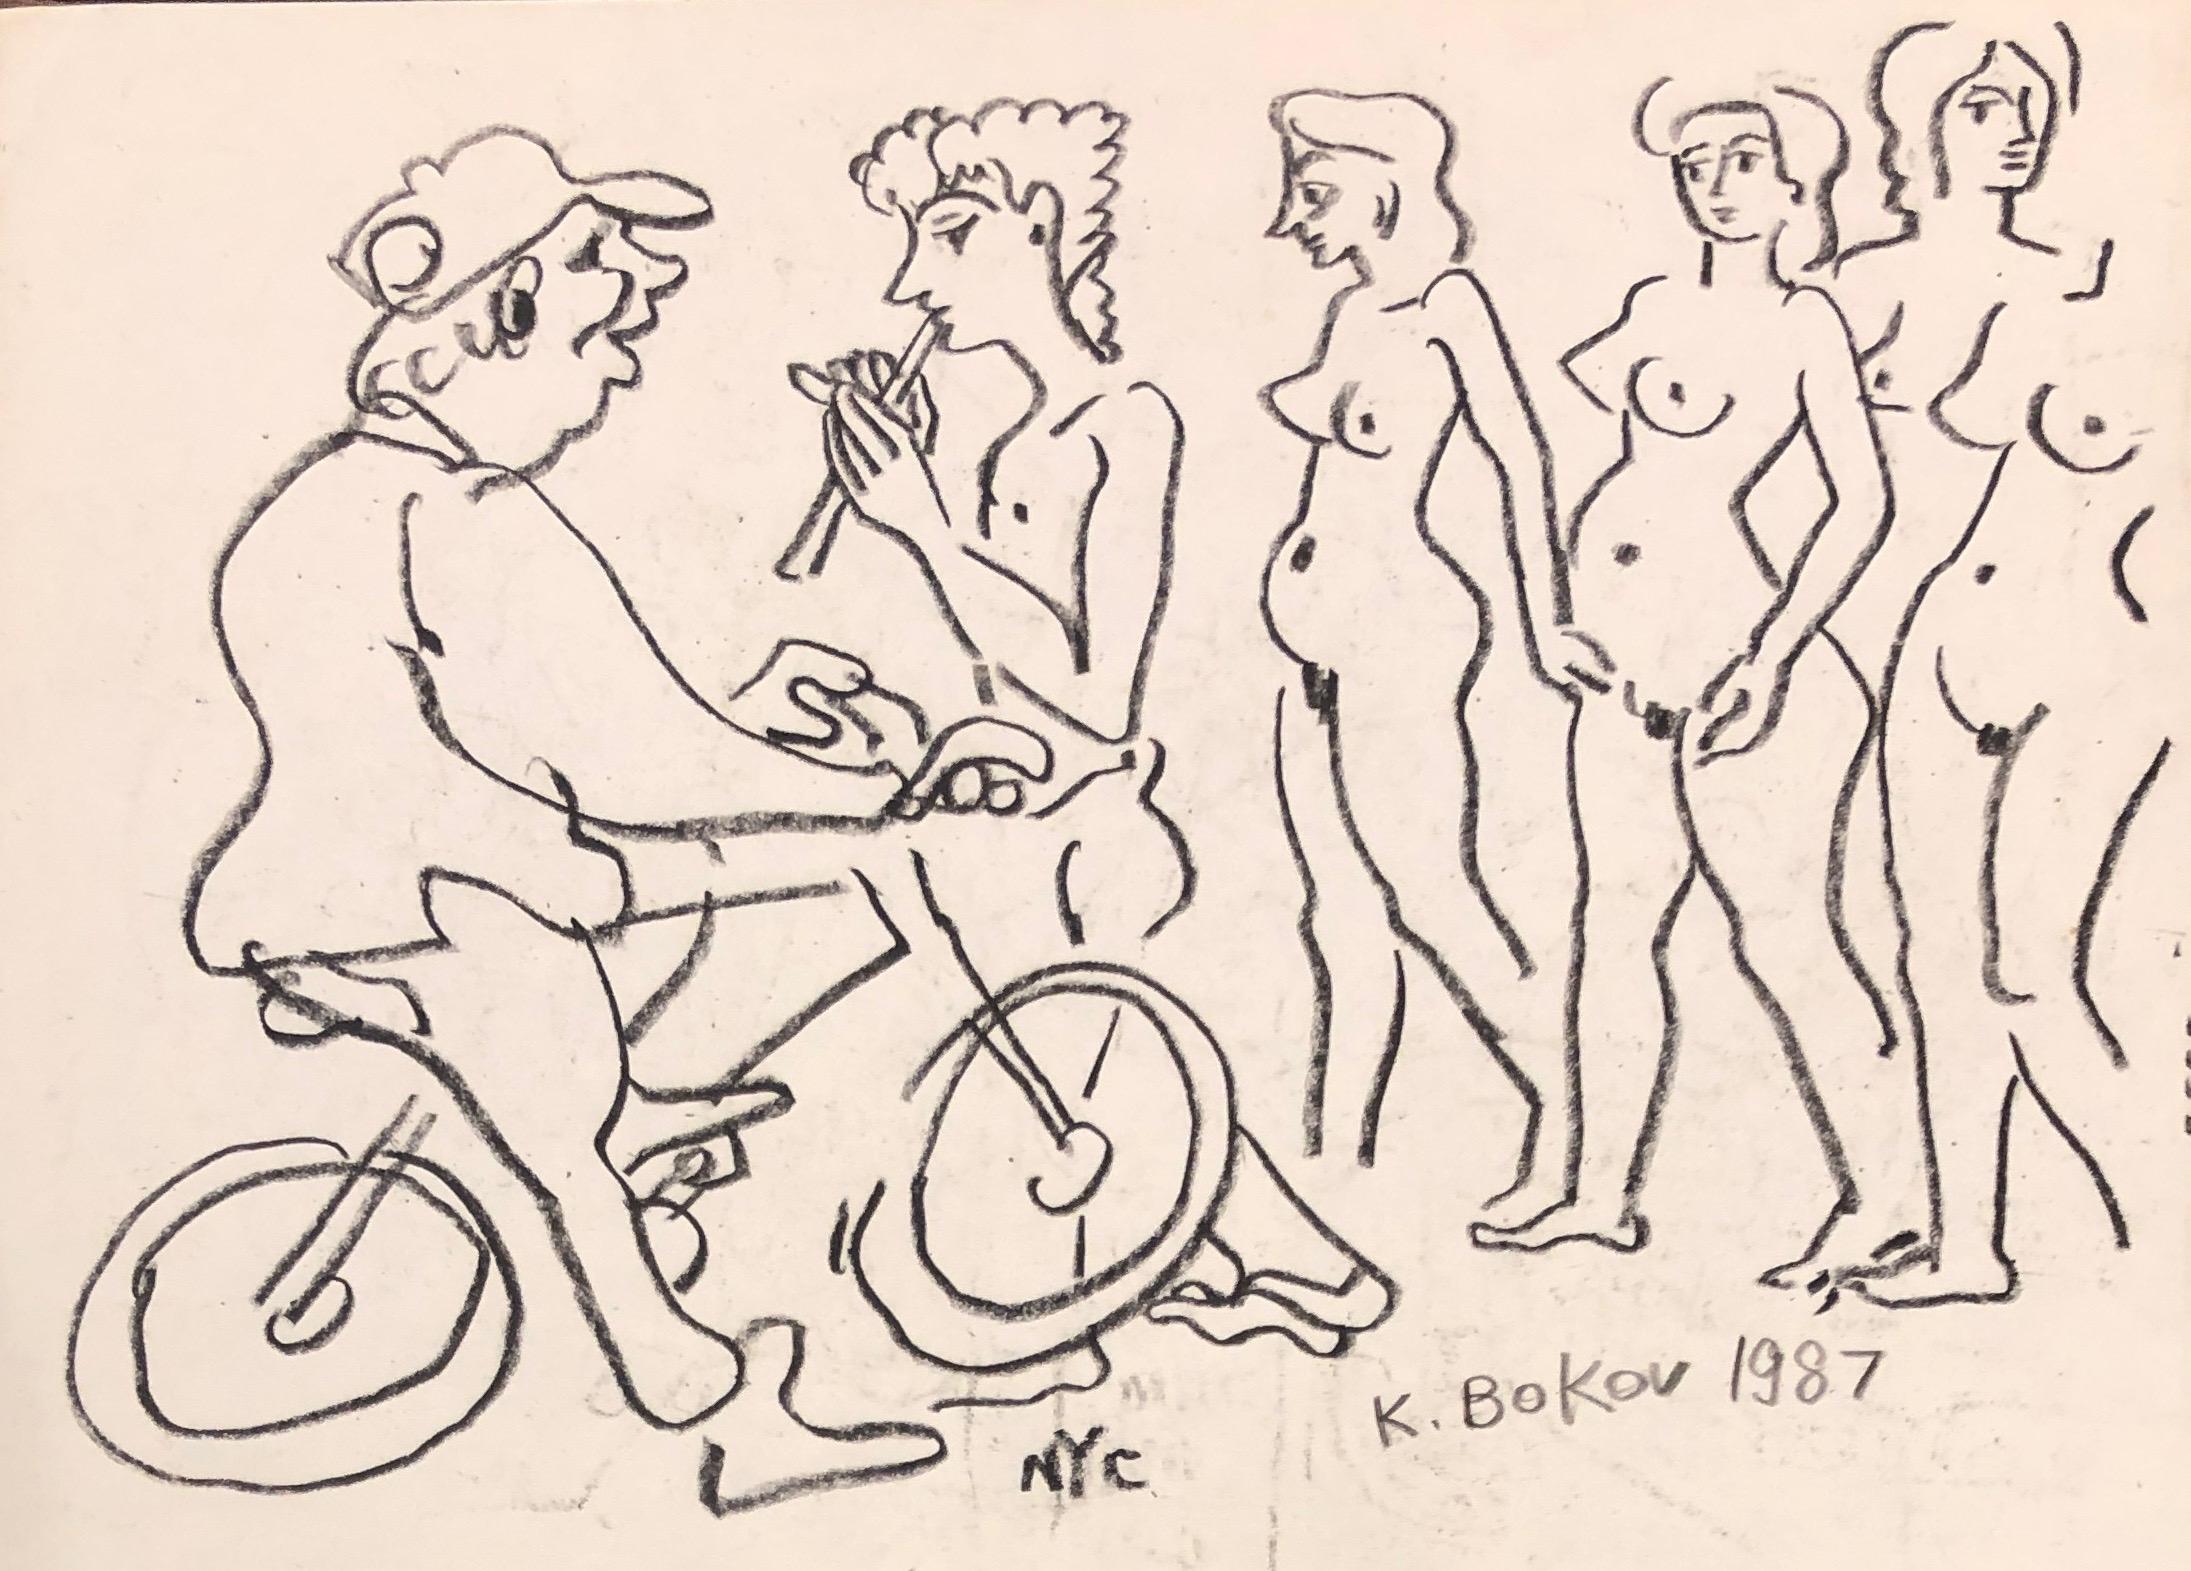 Konstantin Bokov Figurative Art - "Man On Bicycle & Nude Woman"   